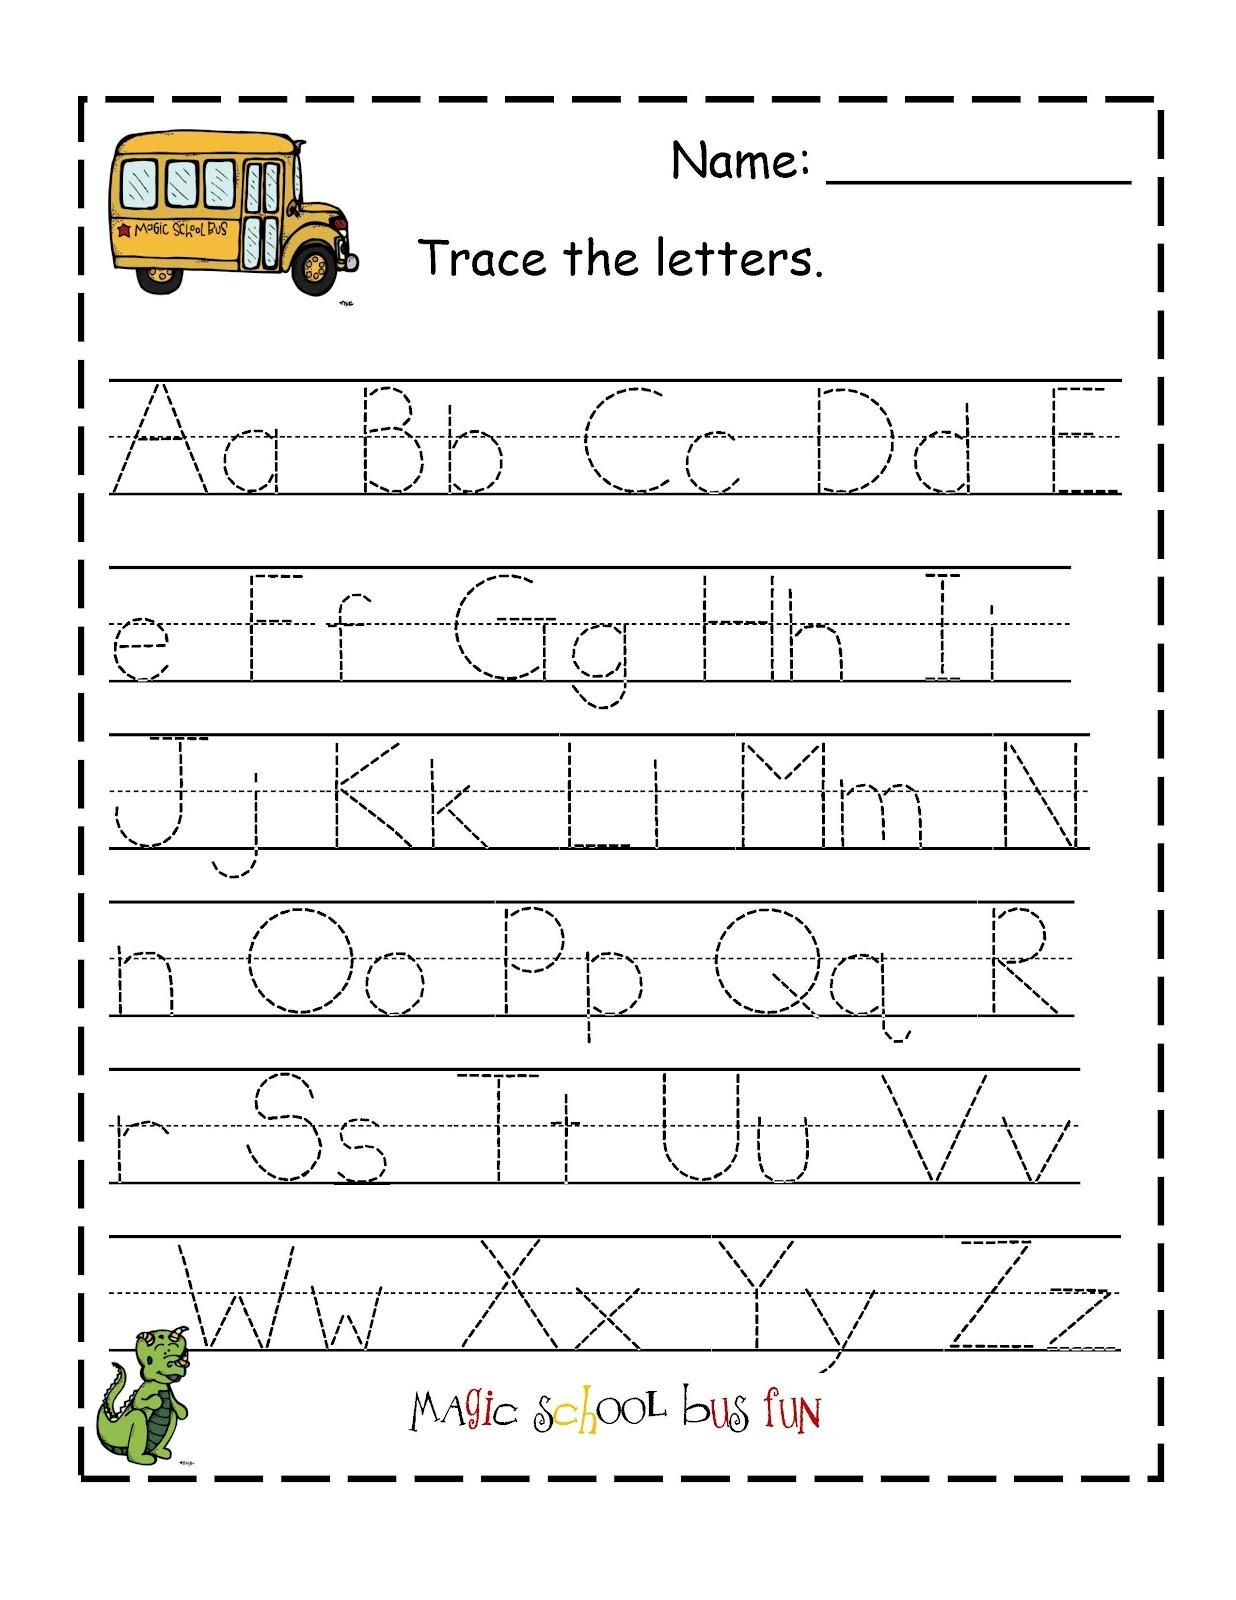 Free Printable Abc Tracing Worksheets #2 | Preschool with regard to Printable Abc Tracing Letters